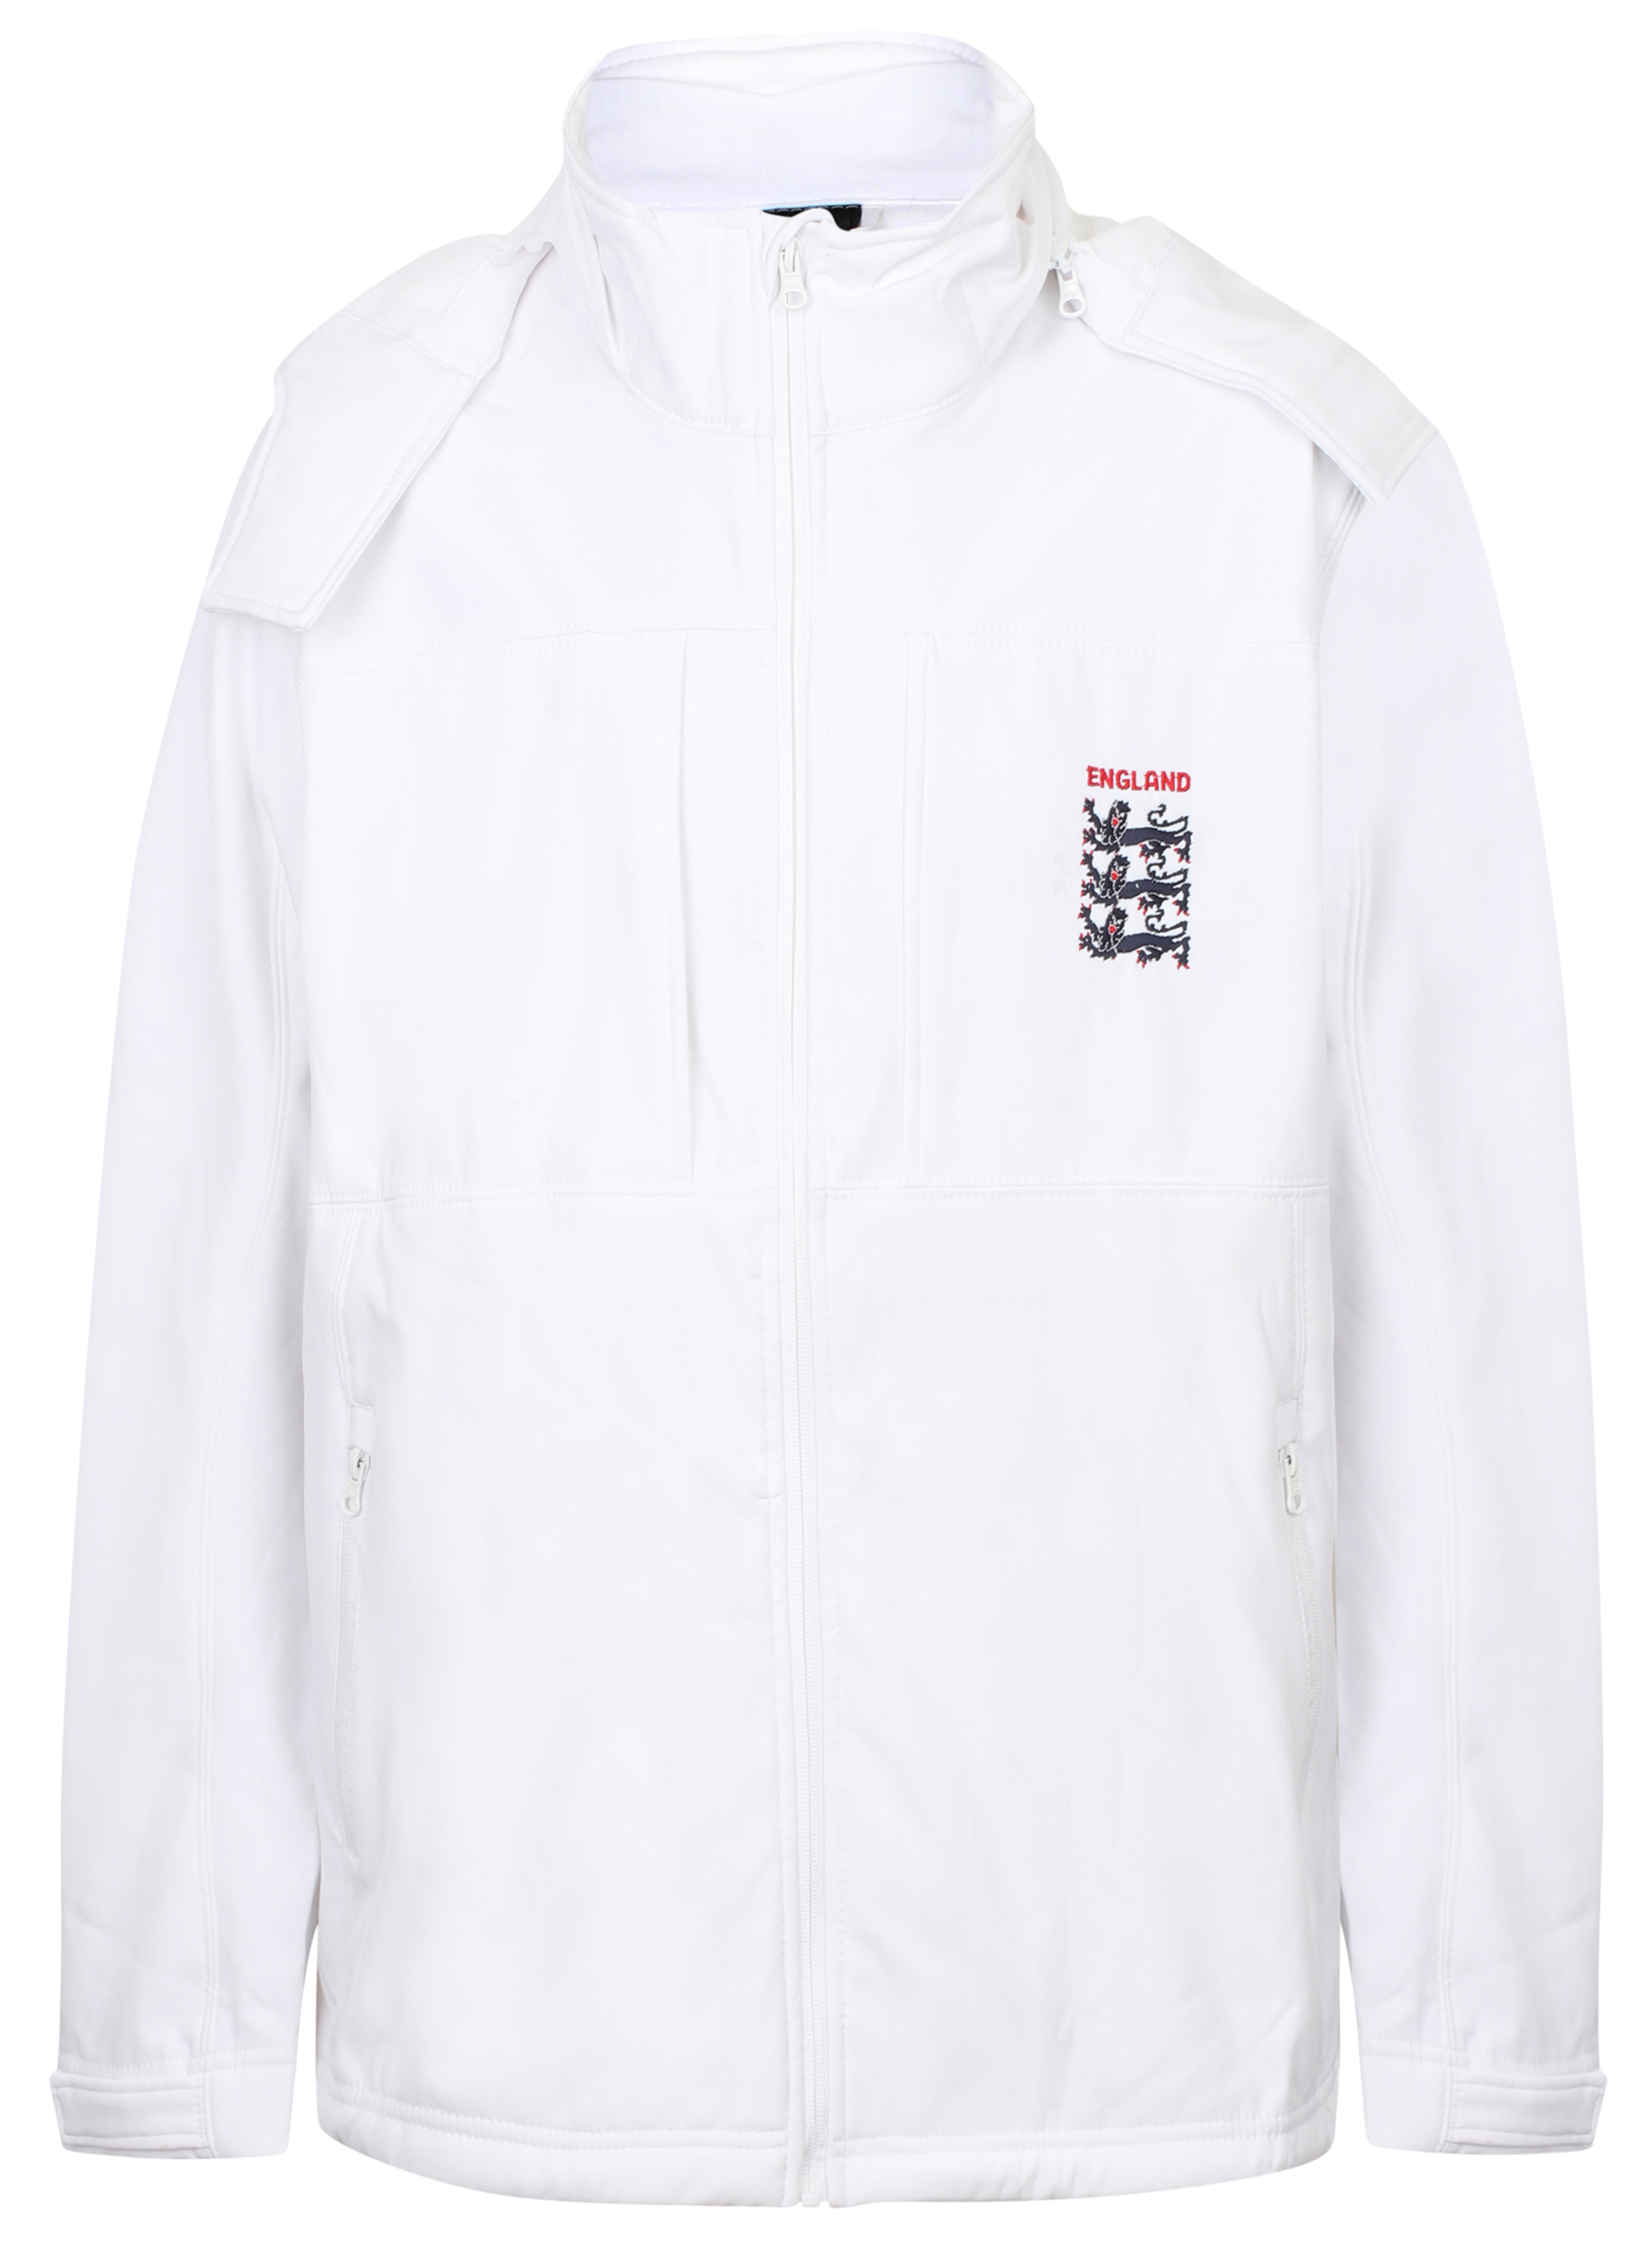 Mens England Jacket Coat Soft Shell White 3 Lions New Hood Lined Pockets 2XL Big 